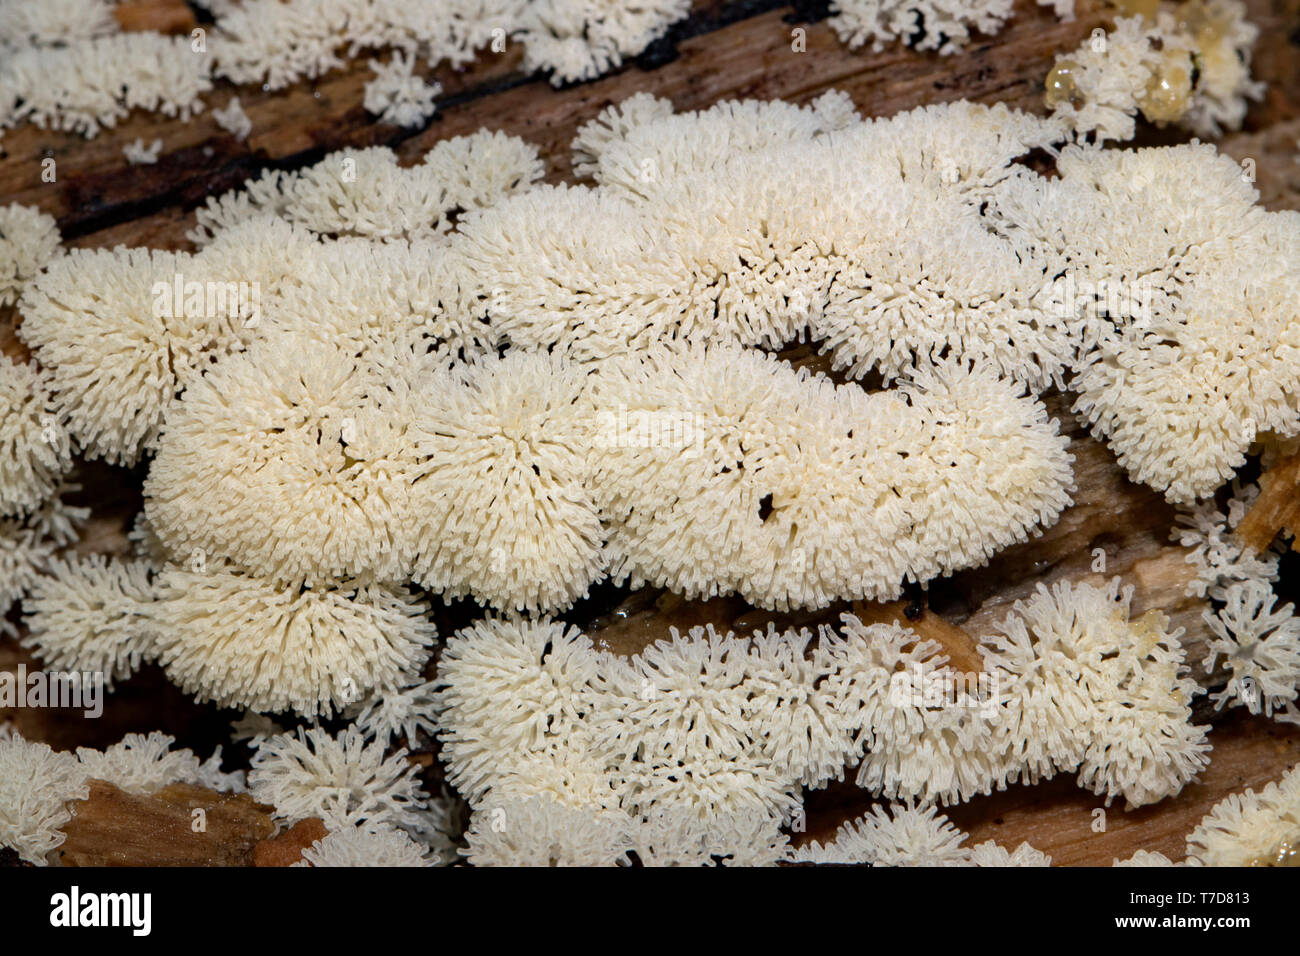 antler-shaped slime fungus, (Ceratiomyxa fruticulosa) Stock Photo